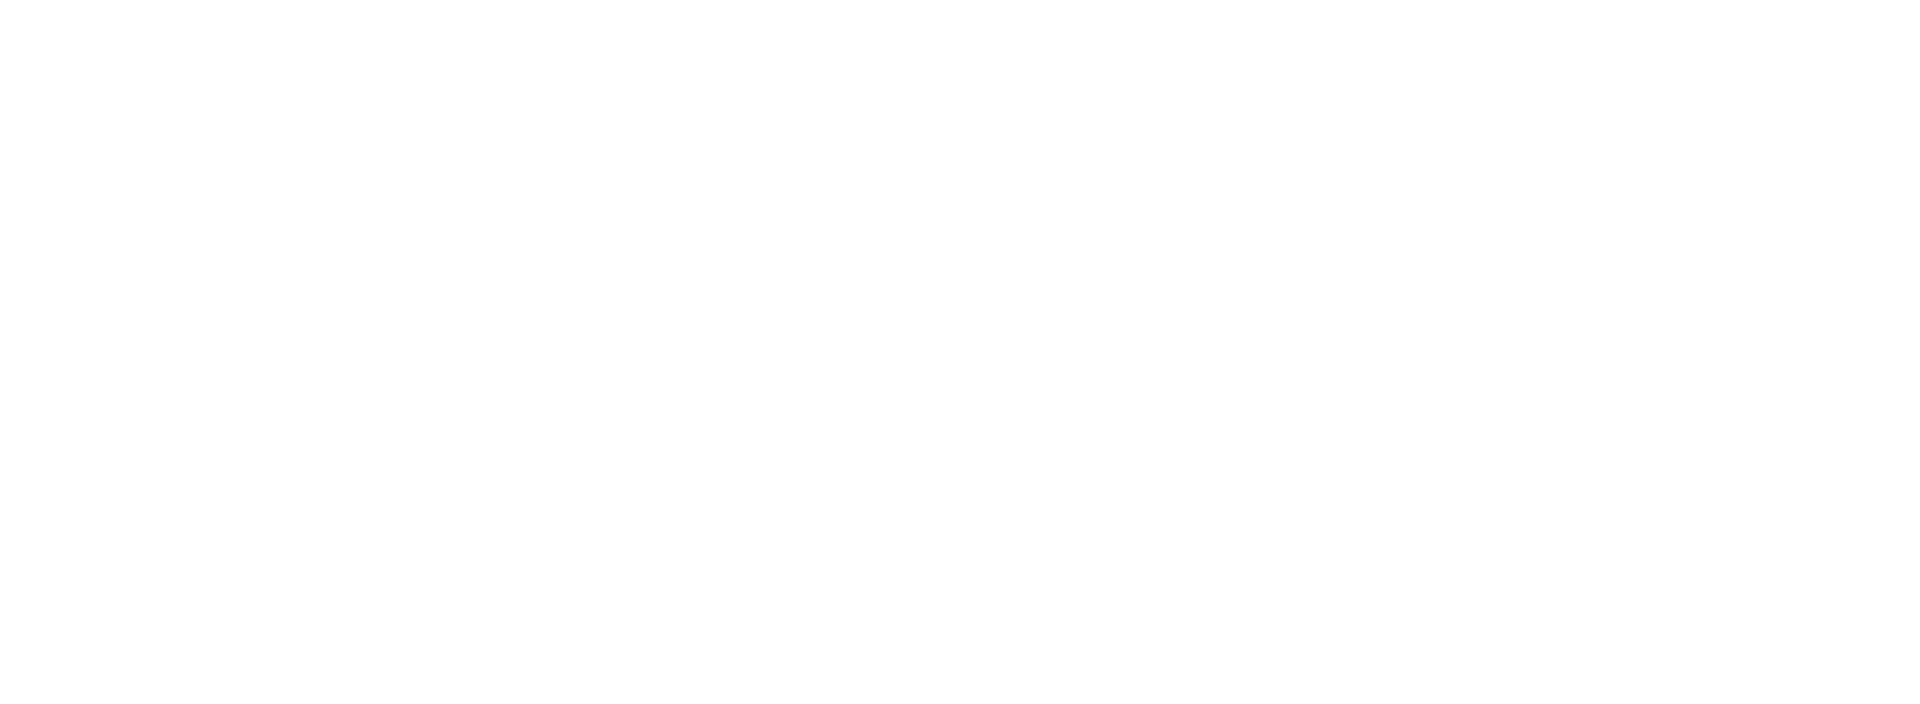 Senior Star: Wexford Place